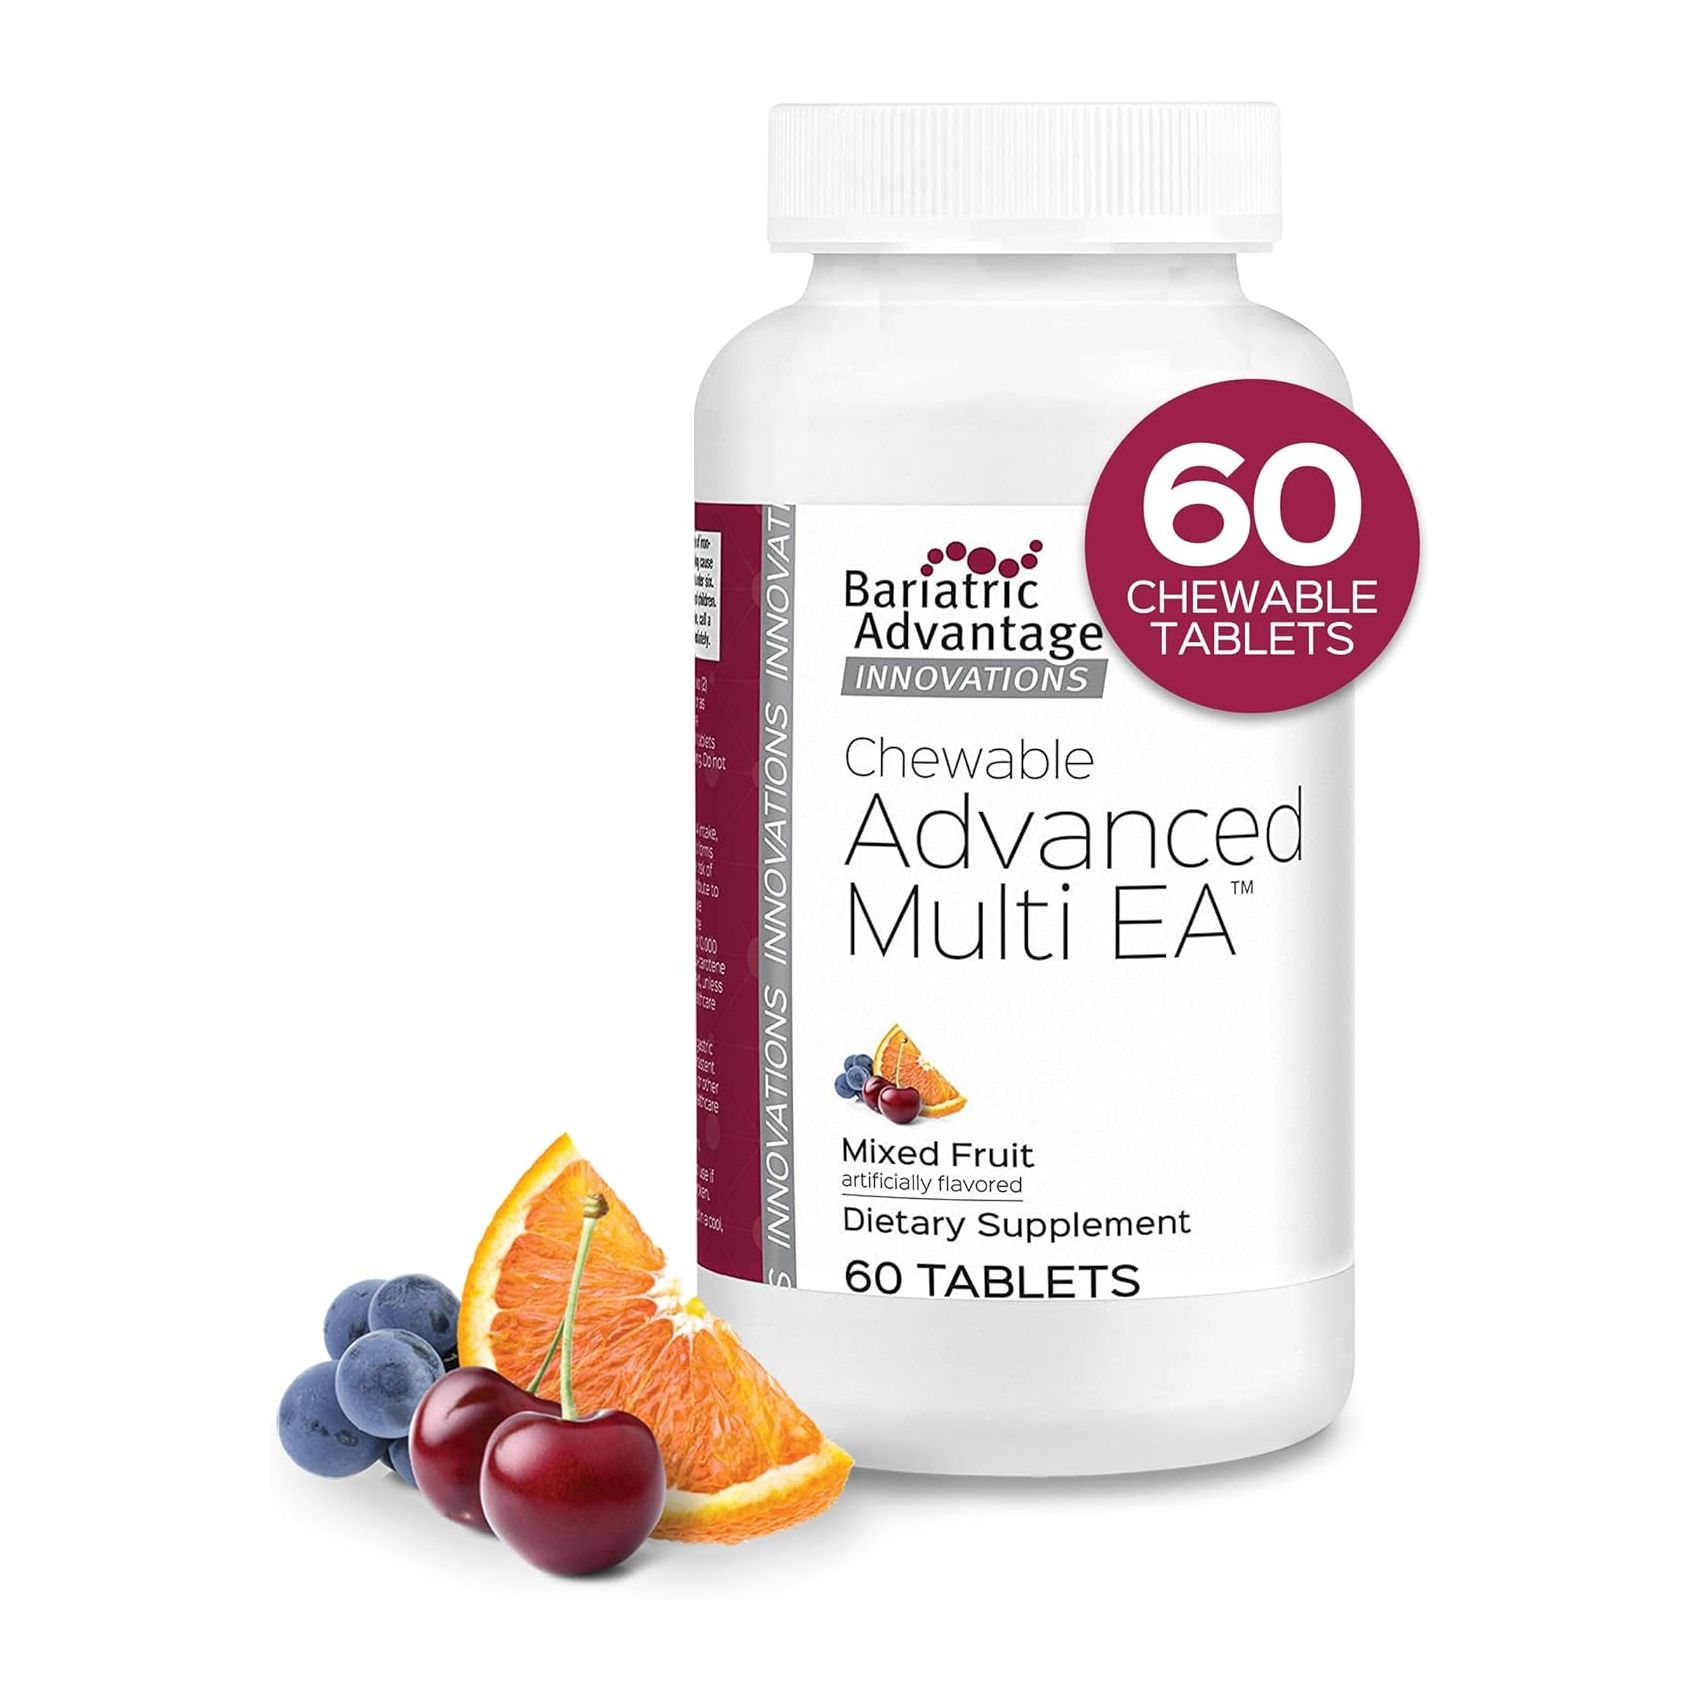 Мультивитамины Bariatric Advantage Chewable Advanced Multi EA Mixed Fruit, 60 таблеток комплекс витаминов группы e country life с токоферолом 268 мг 400 ме 90 капсул